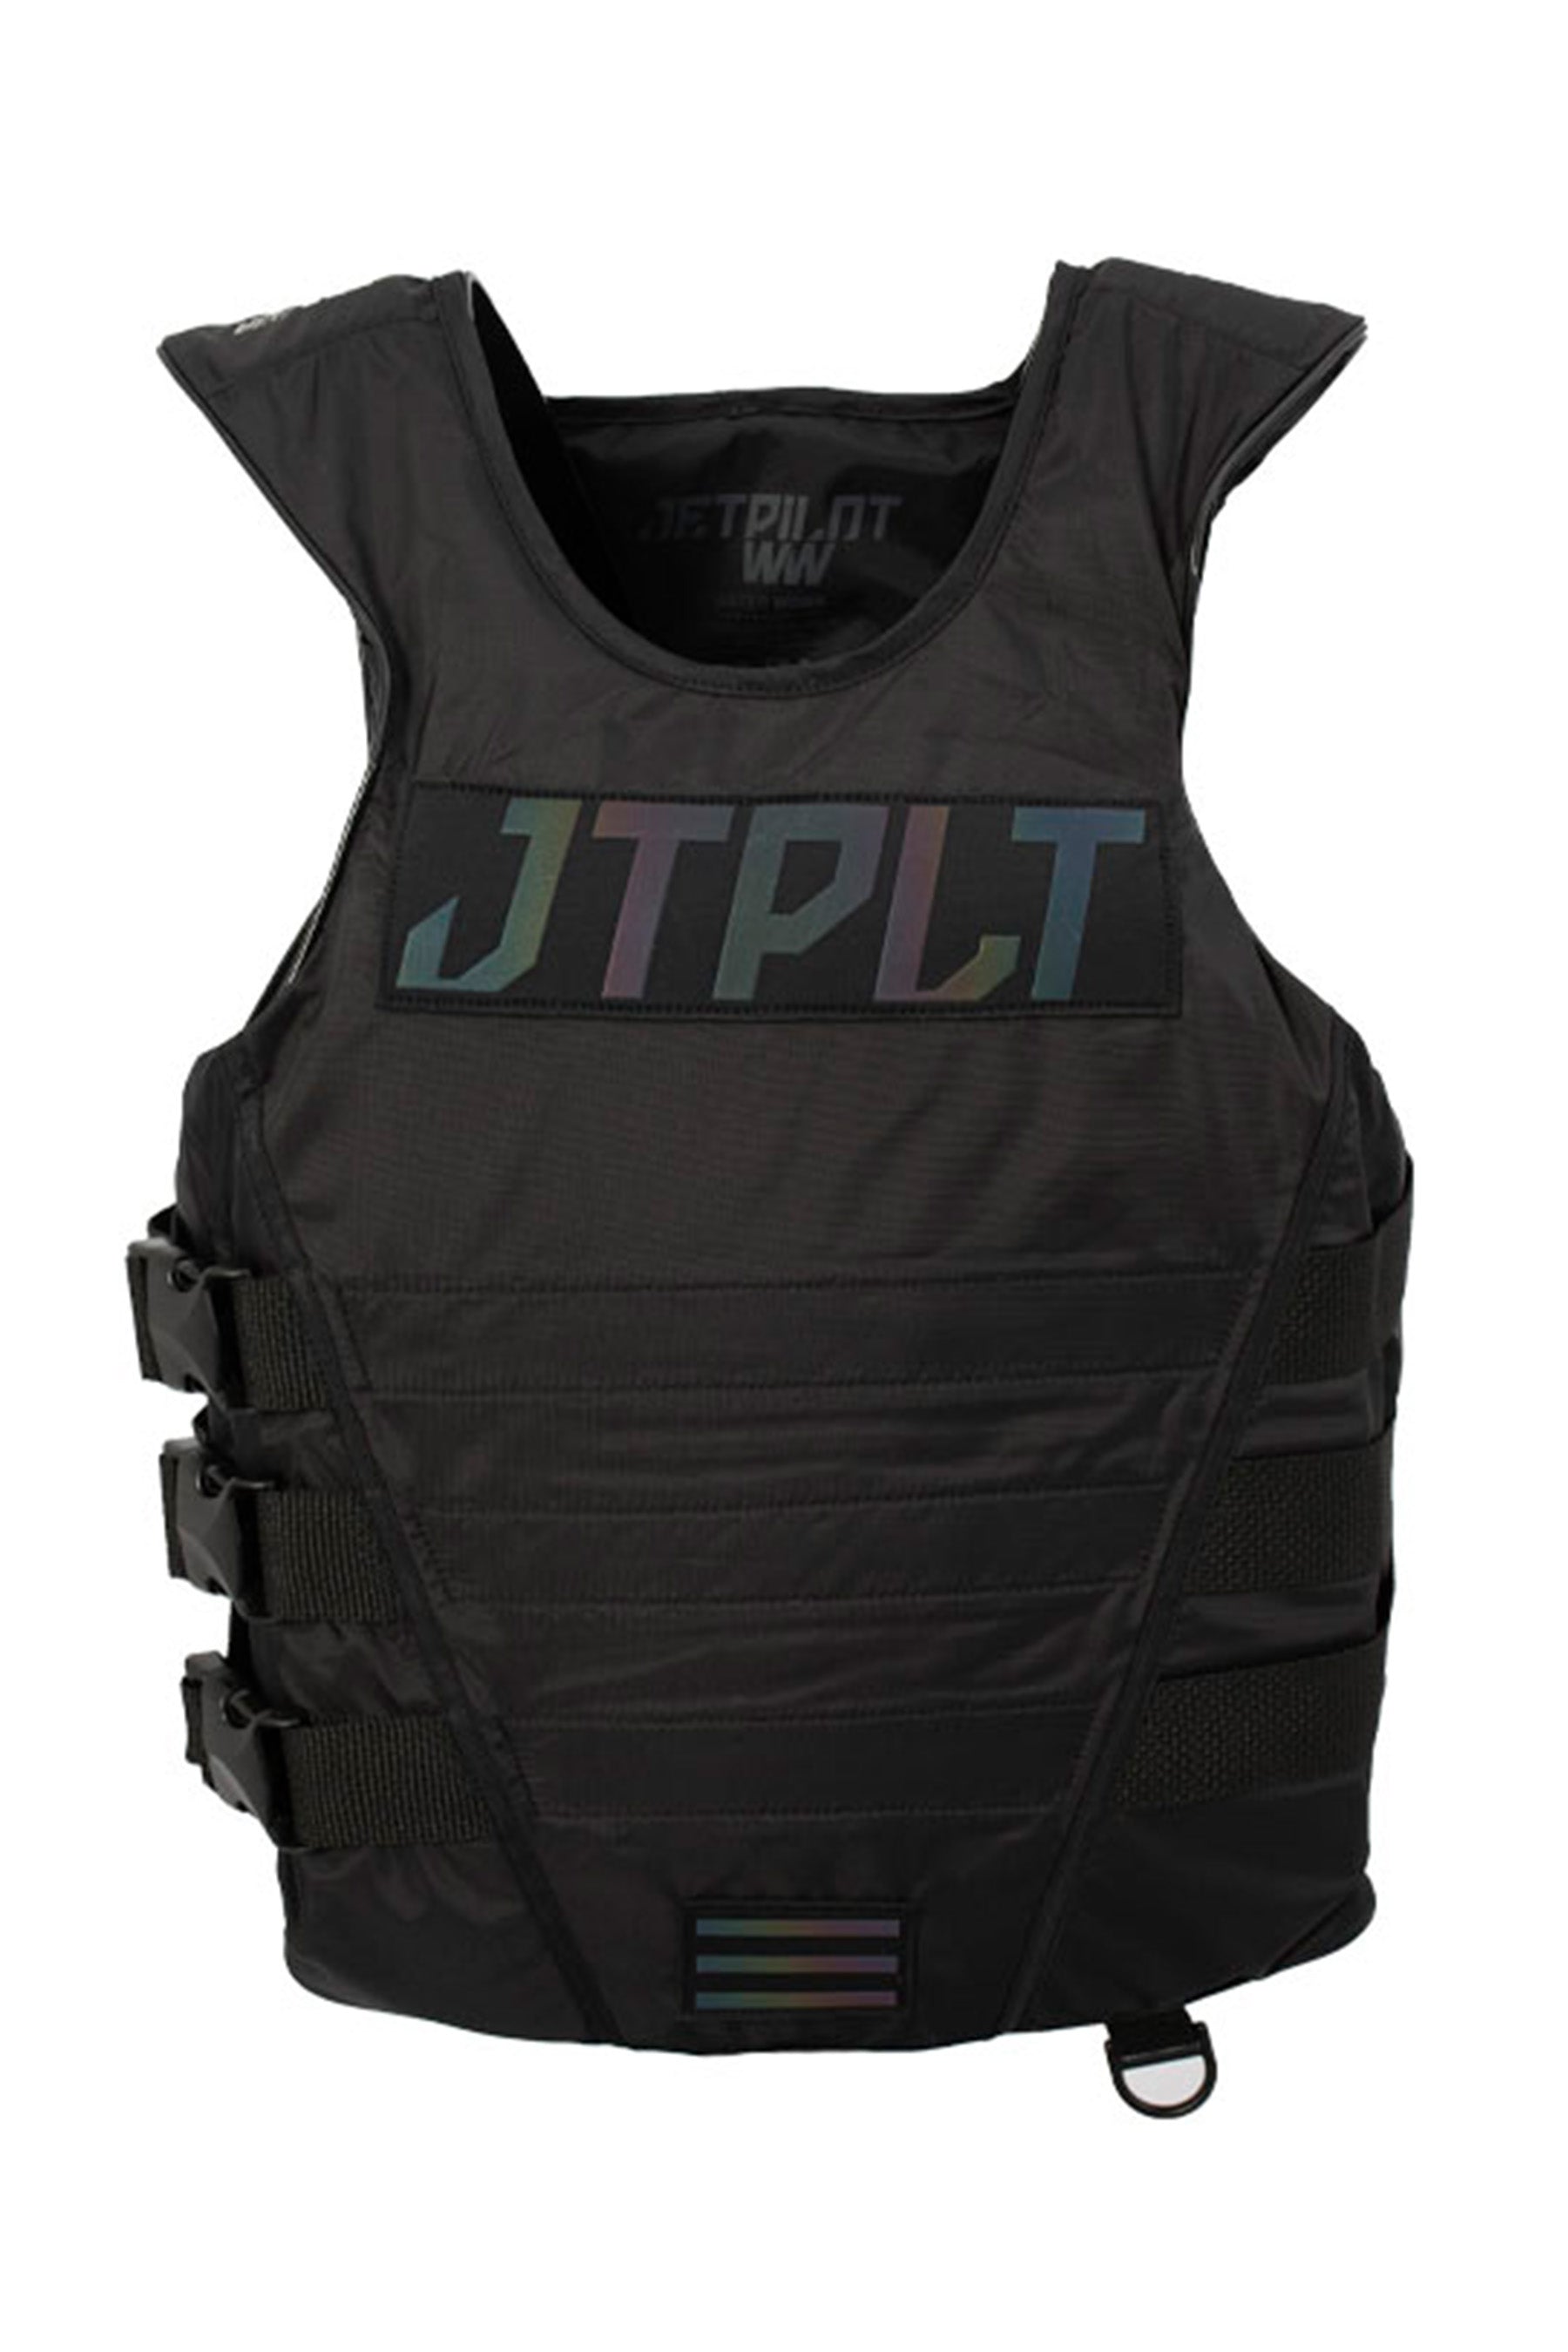 Jetpilot Rx Vault Mens Nylon Life Jacket - Black